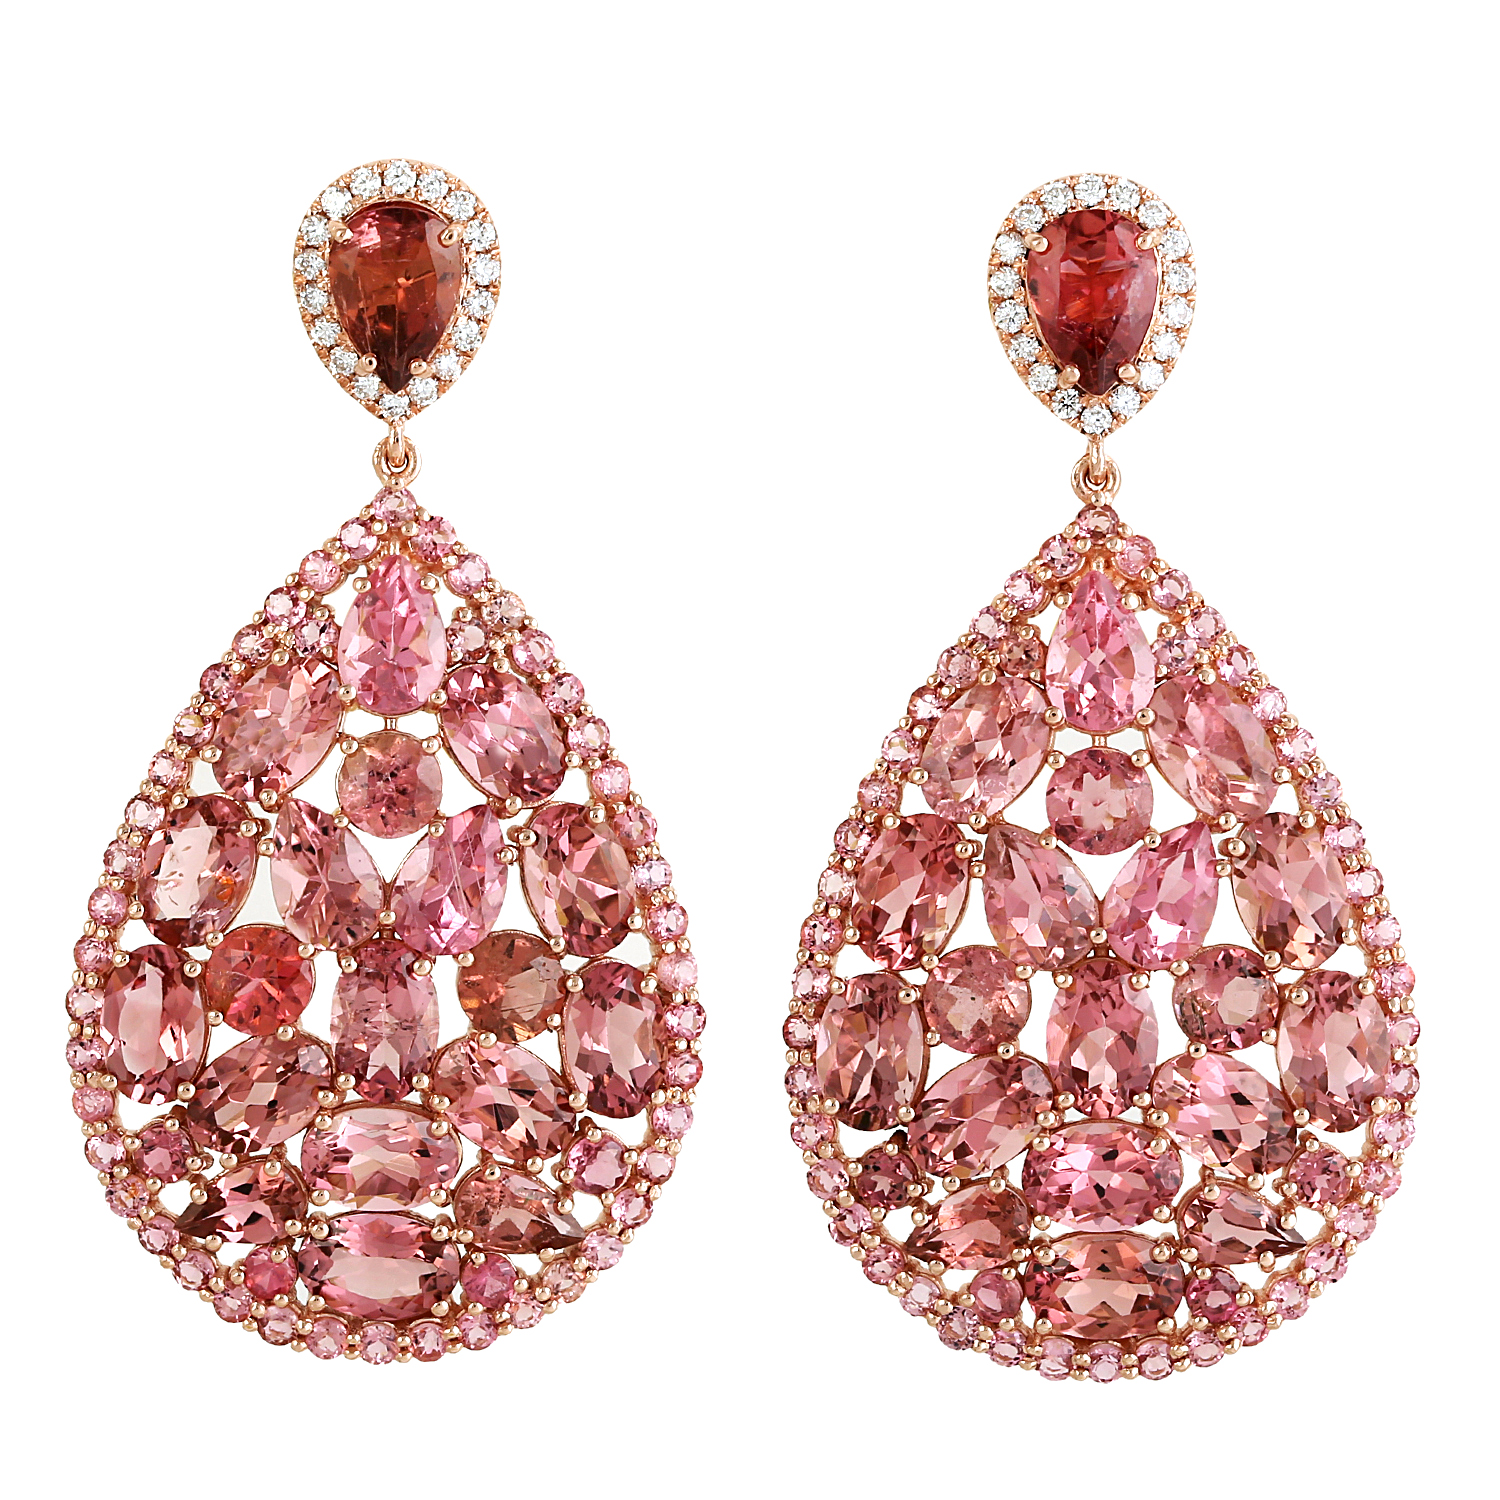 Pink Tourmaline Pave Diamond Dangle Earrings Handmade Jewelry | eBay